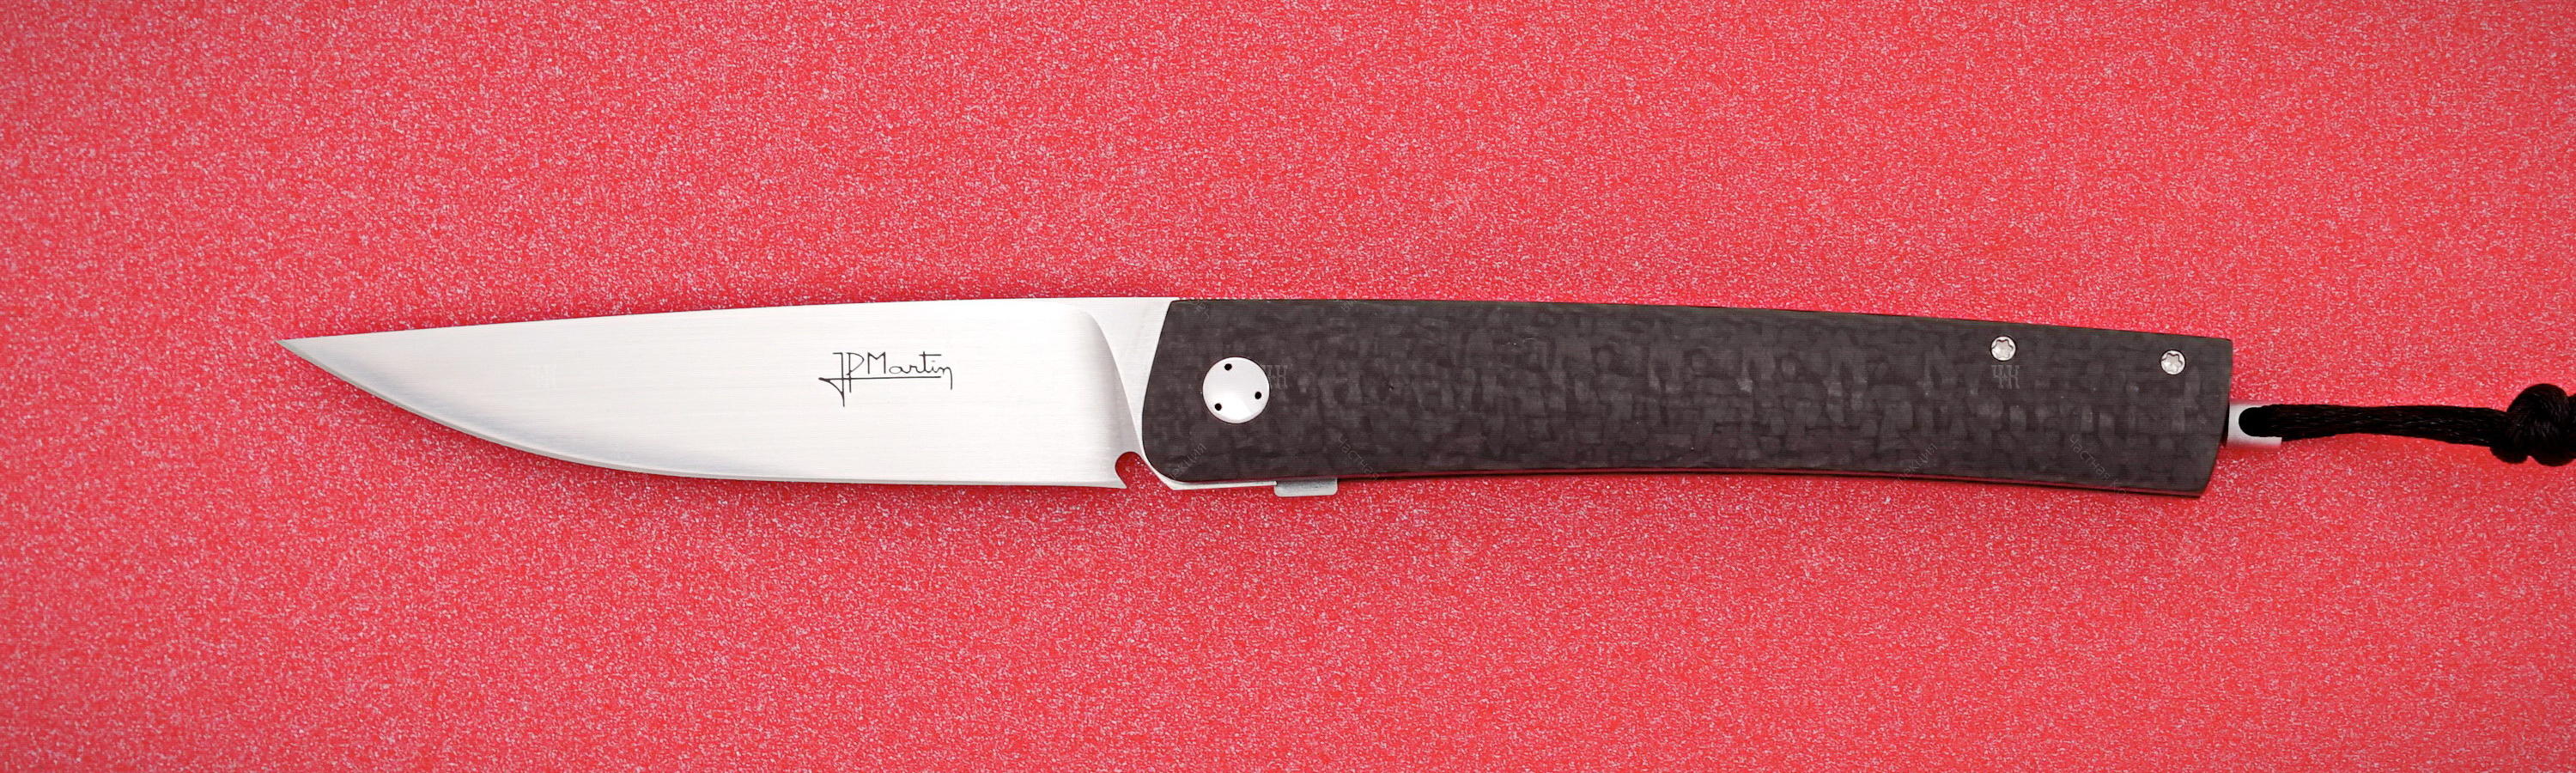 Jean-Pierre Martin Basic Carbon Mini knife